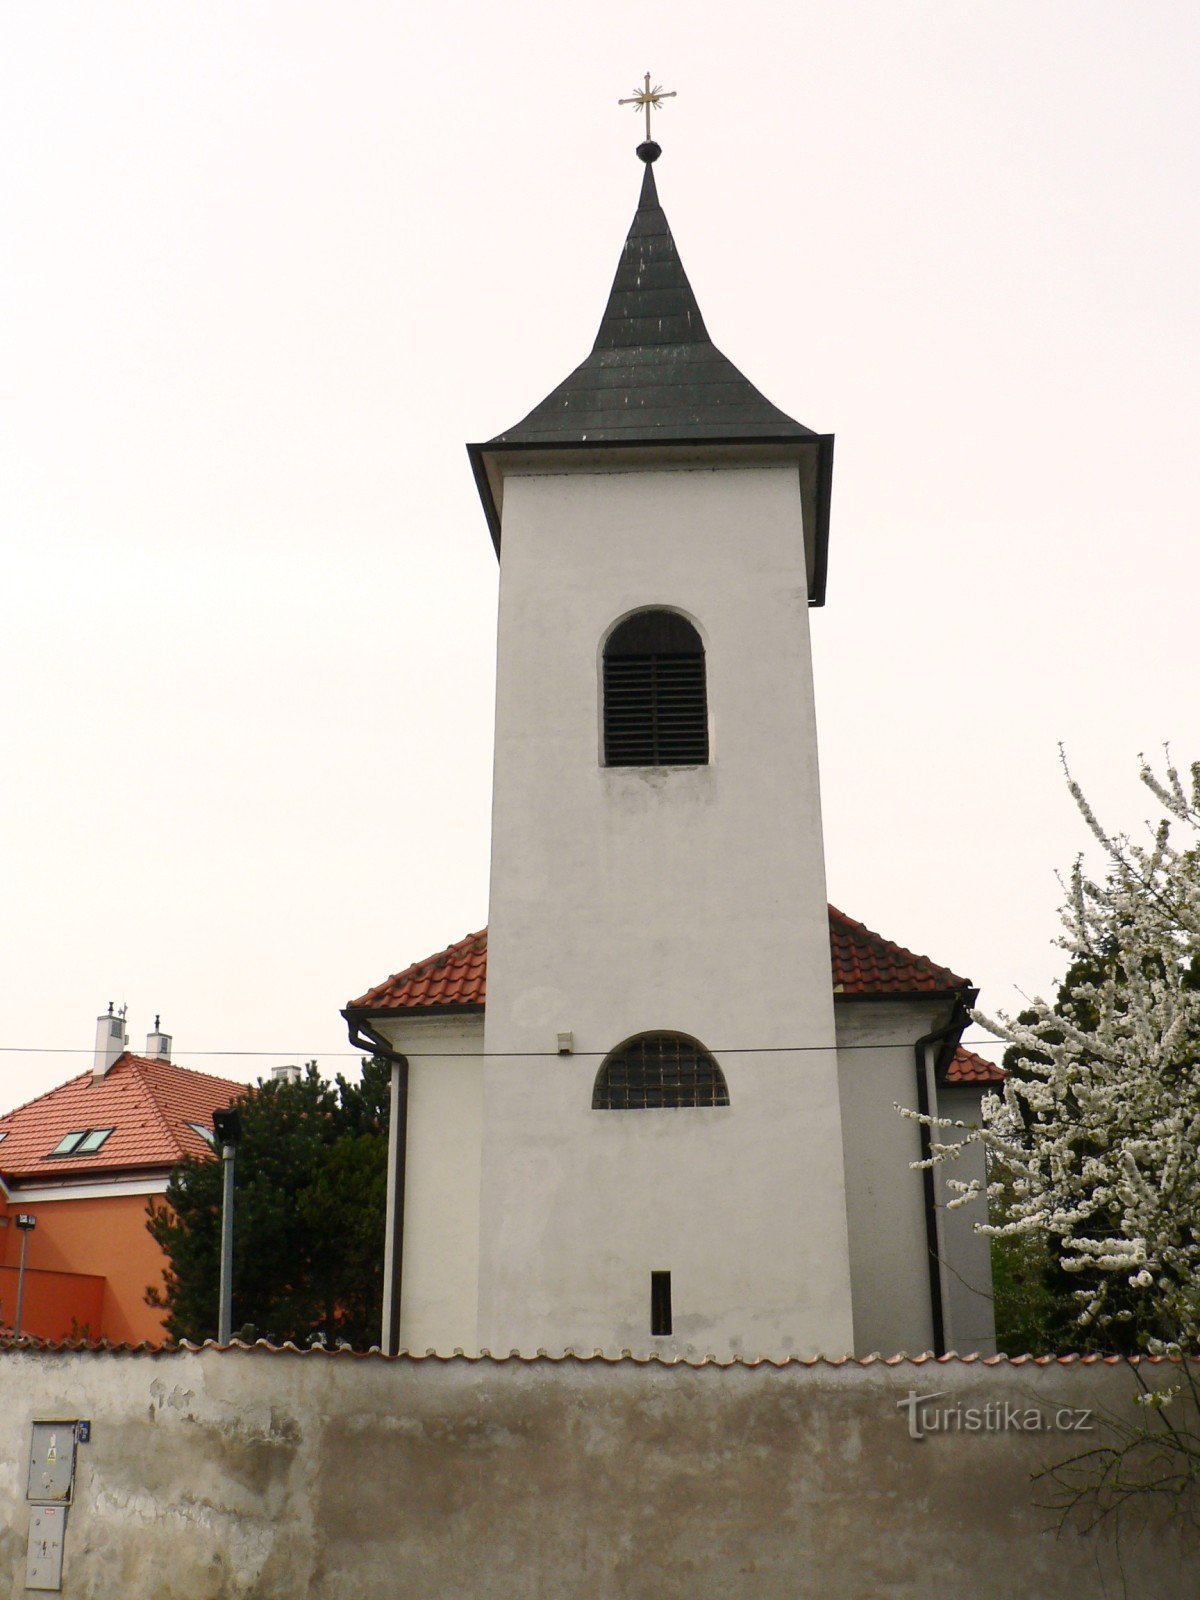 Hrnčíře (プラハ) - Church of St. プロコピウス